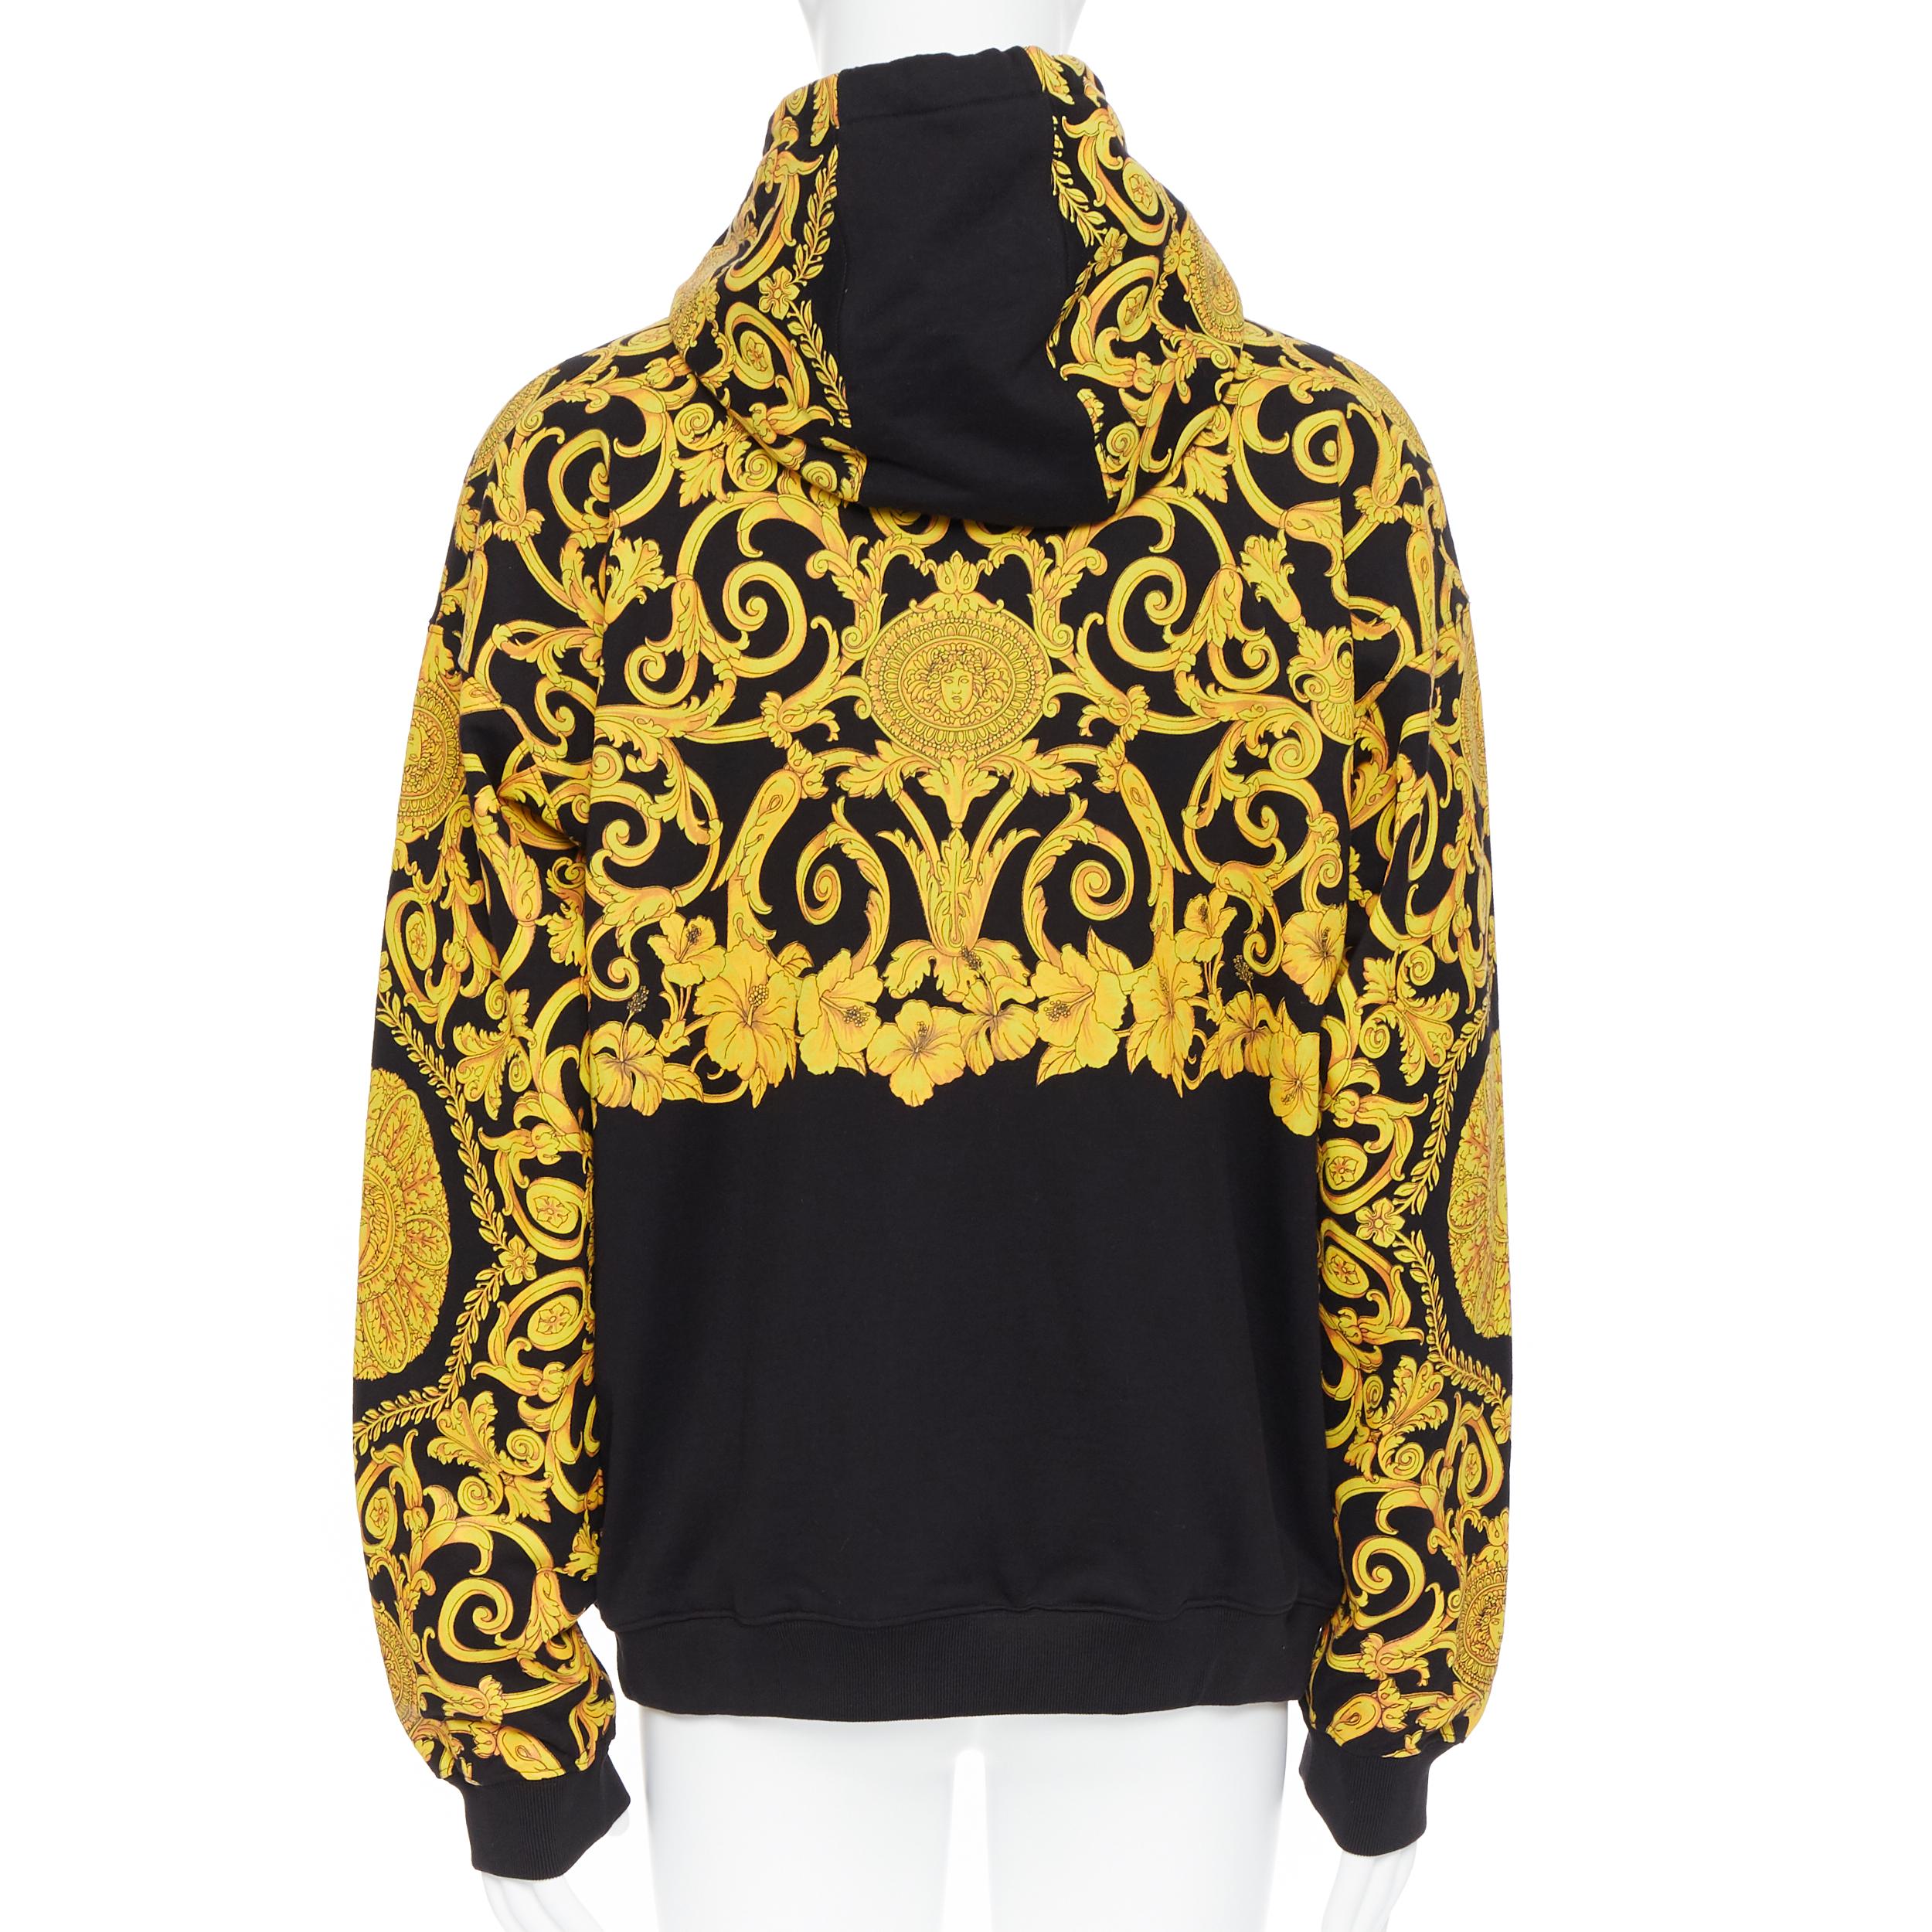 Men's new VERSACE gold Medusa baroque floral print black cotton casual zip hoodie XL